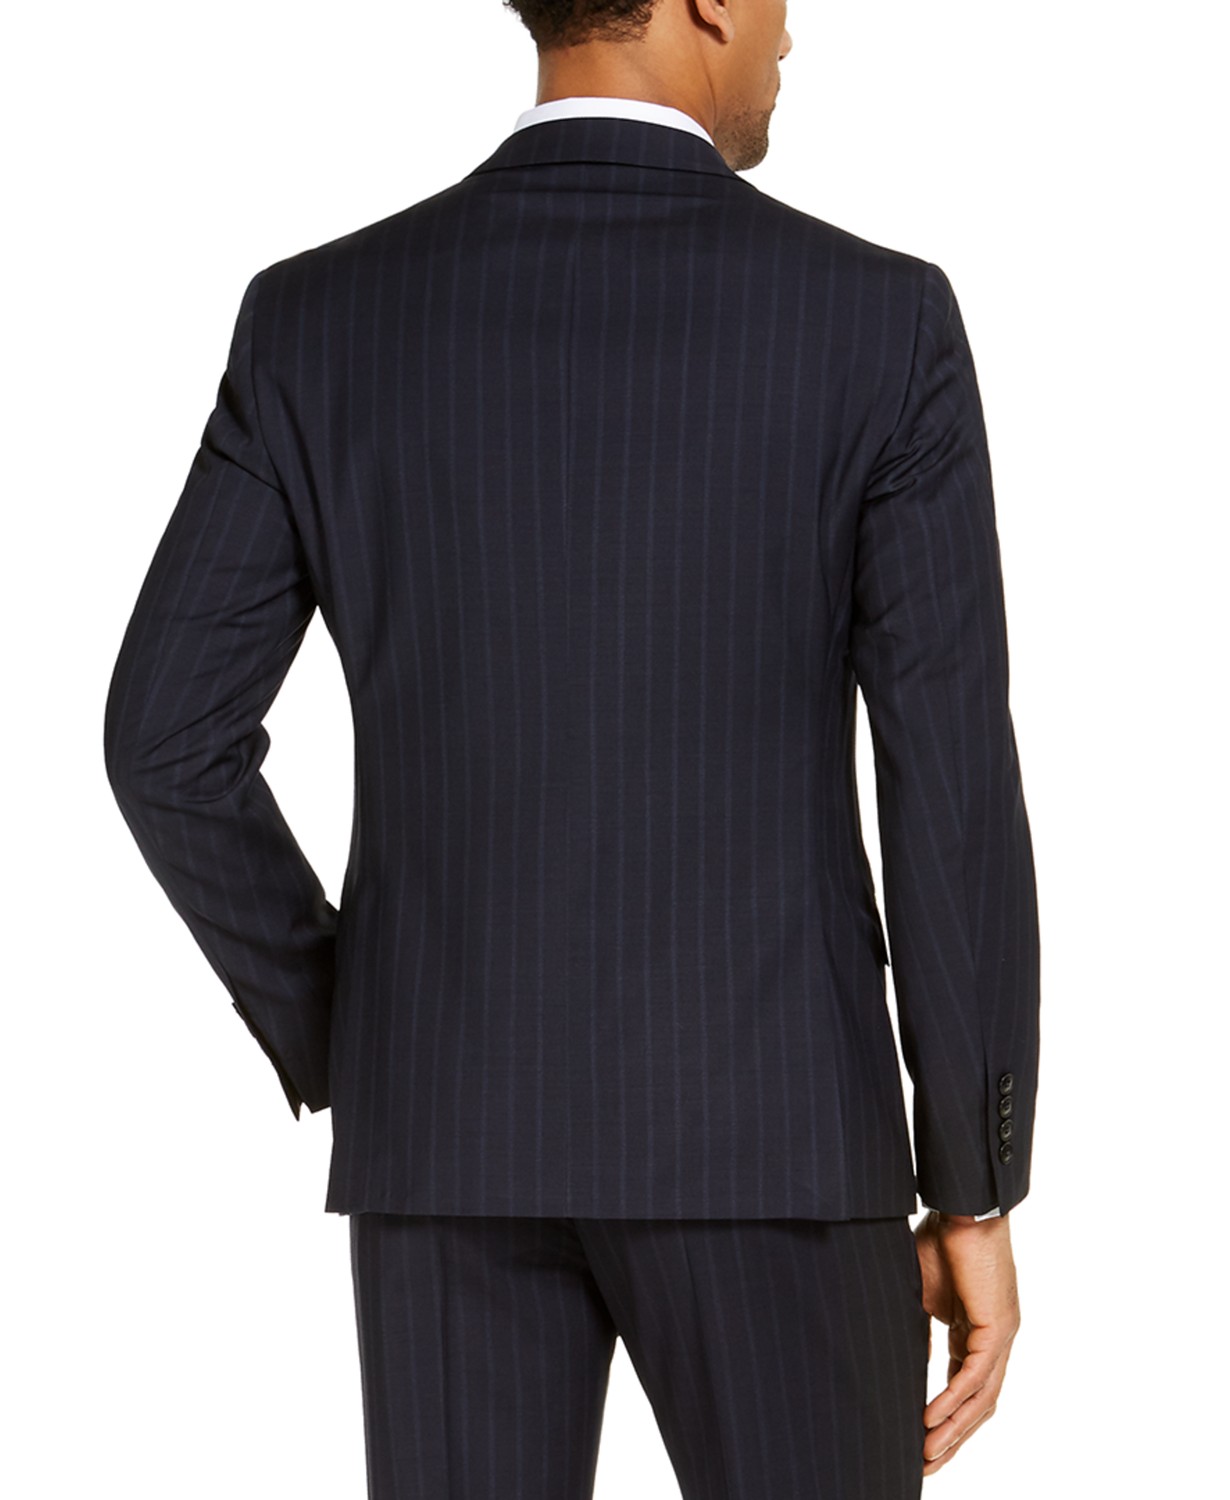 www.couturepoint.com-armani-exchange-mens-navy-wool-slim-fit-pinstripe-suit-jacket